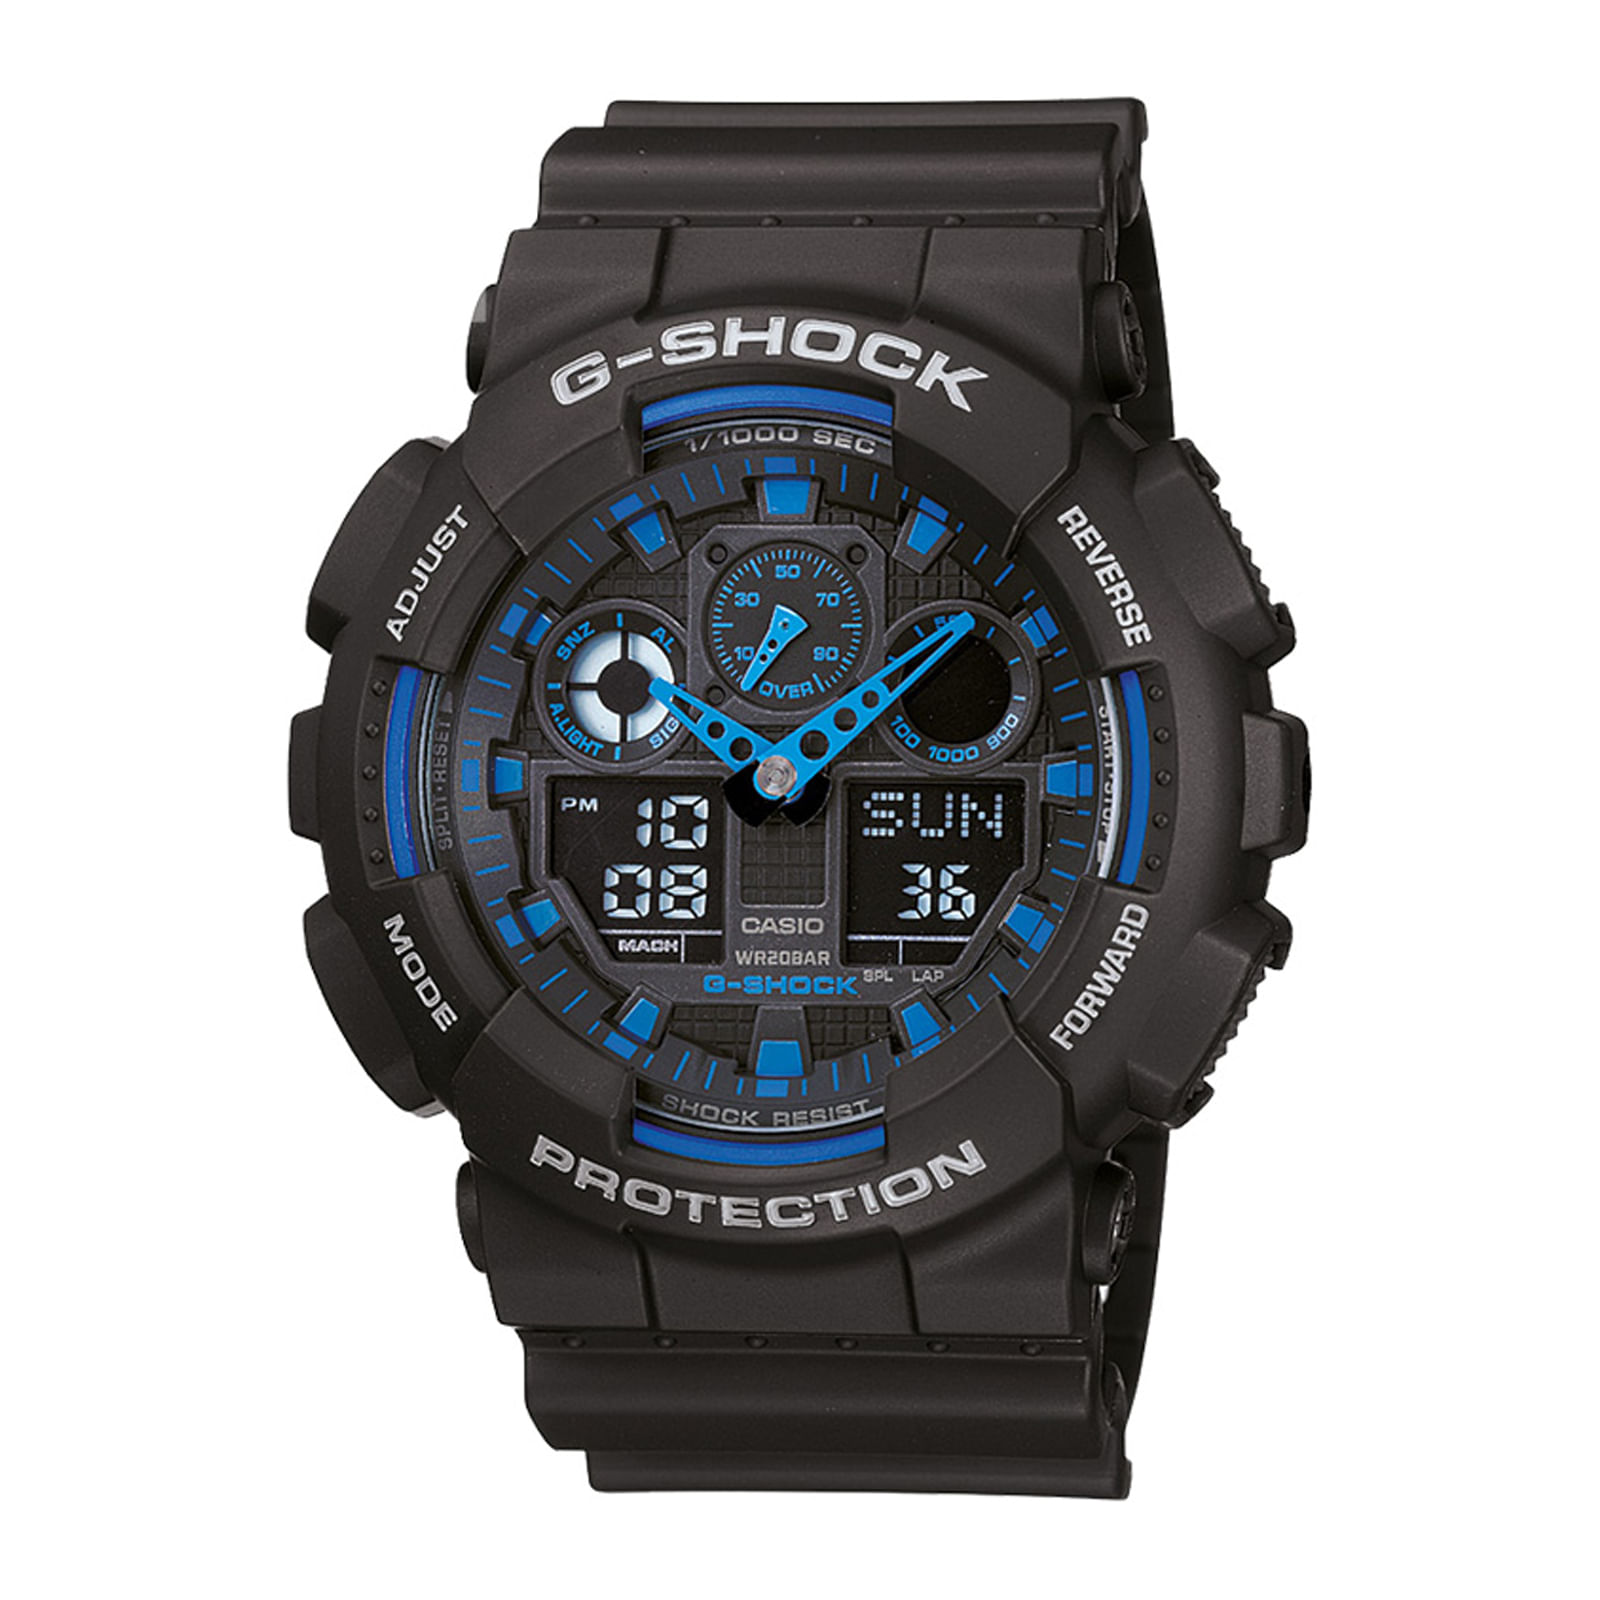 Reloj G-SHOCK GA-100-1A2 Resina Hombre Negro